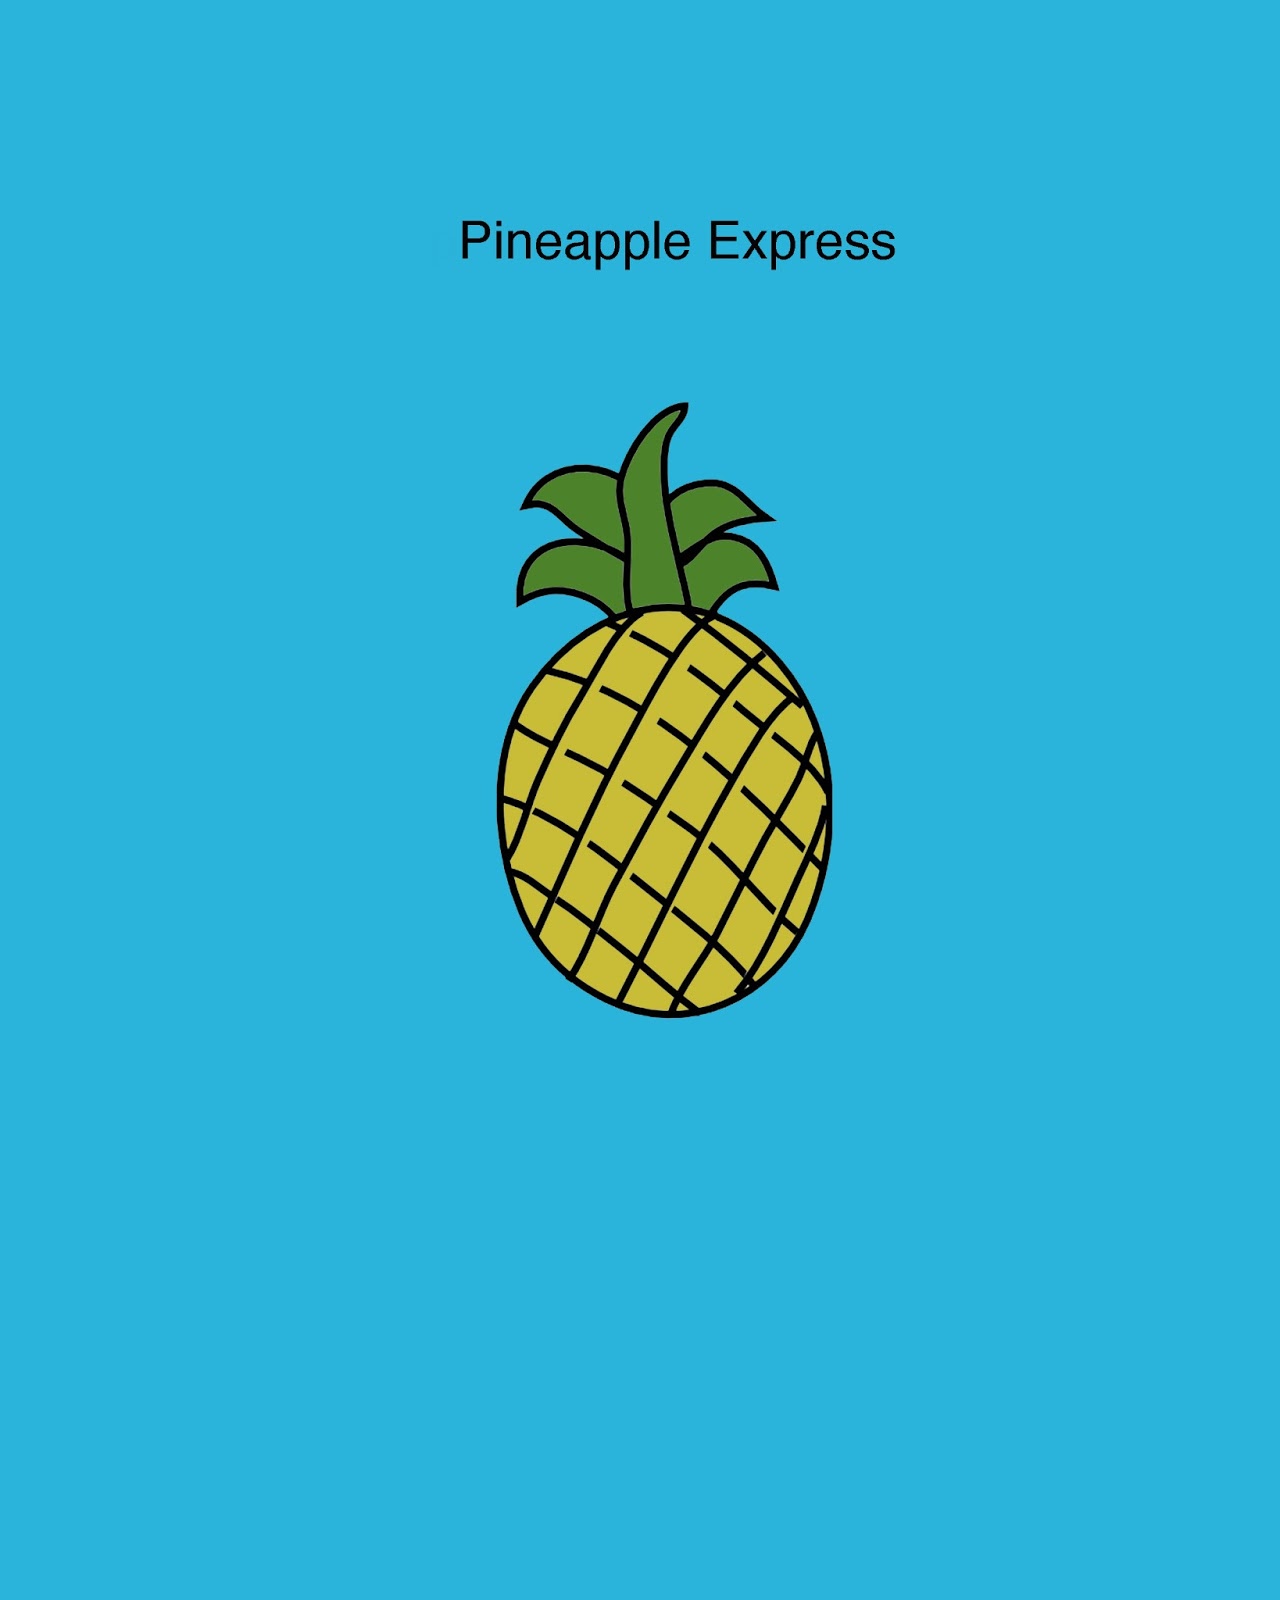 pineapple express wallpaper   weddingdressincom